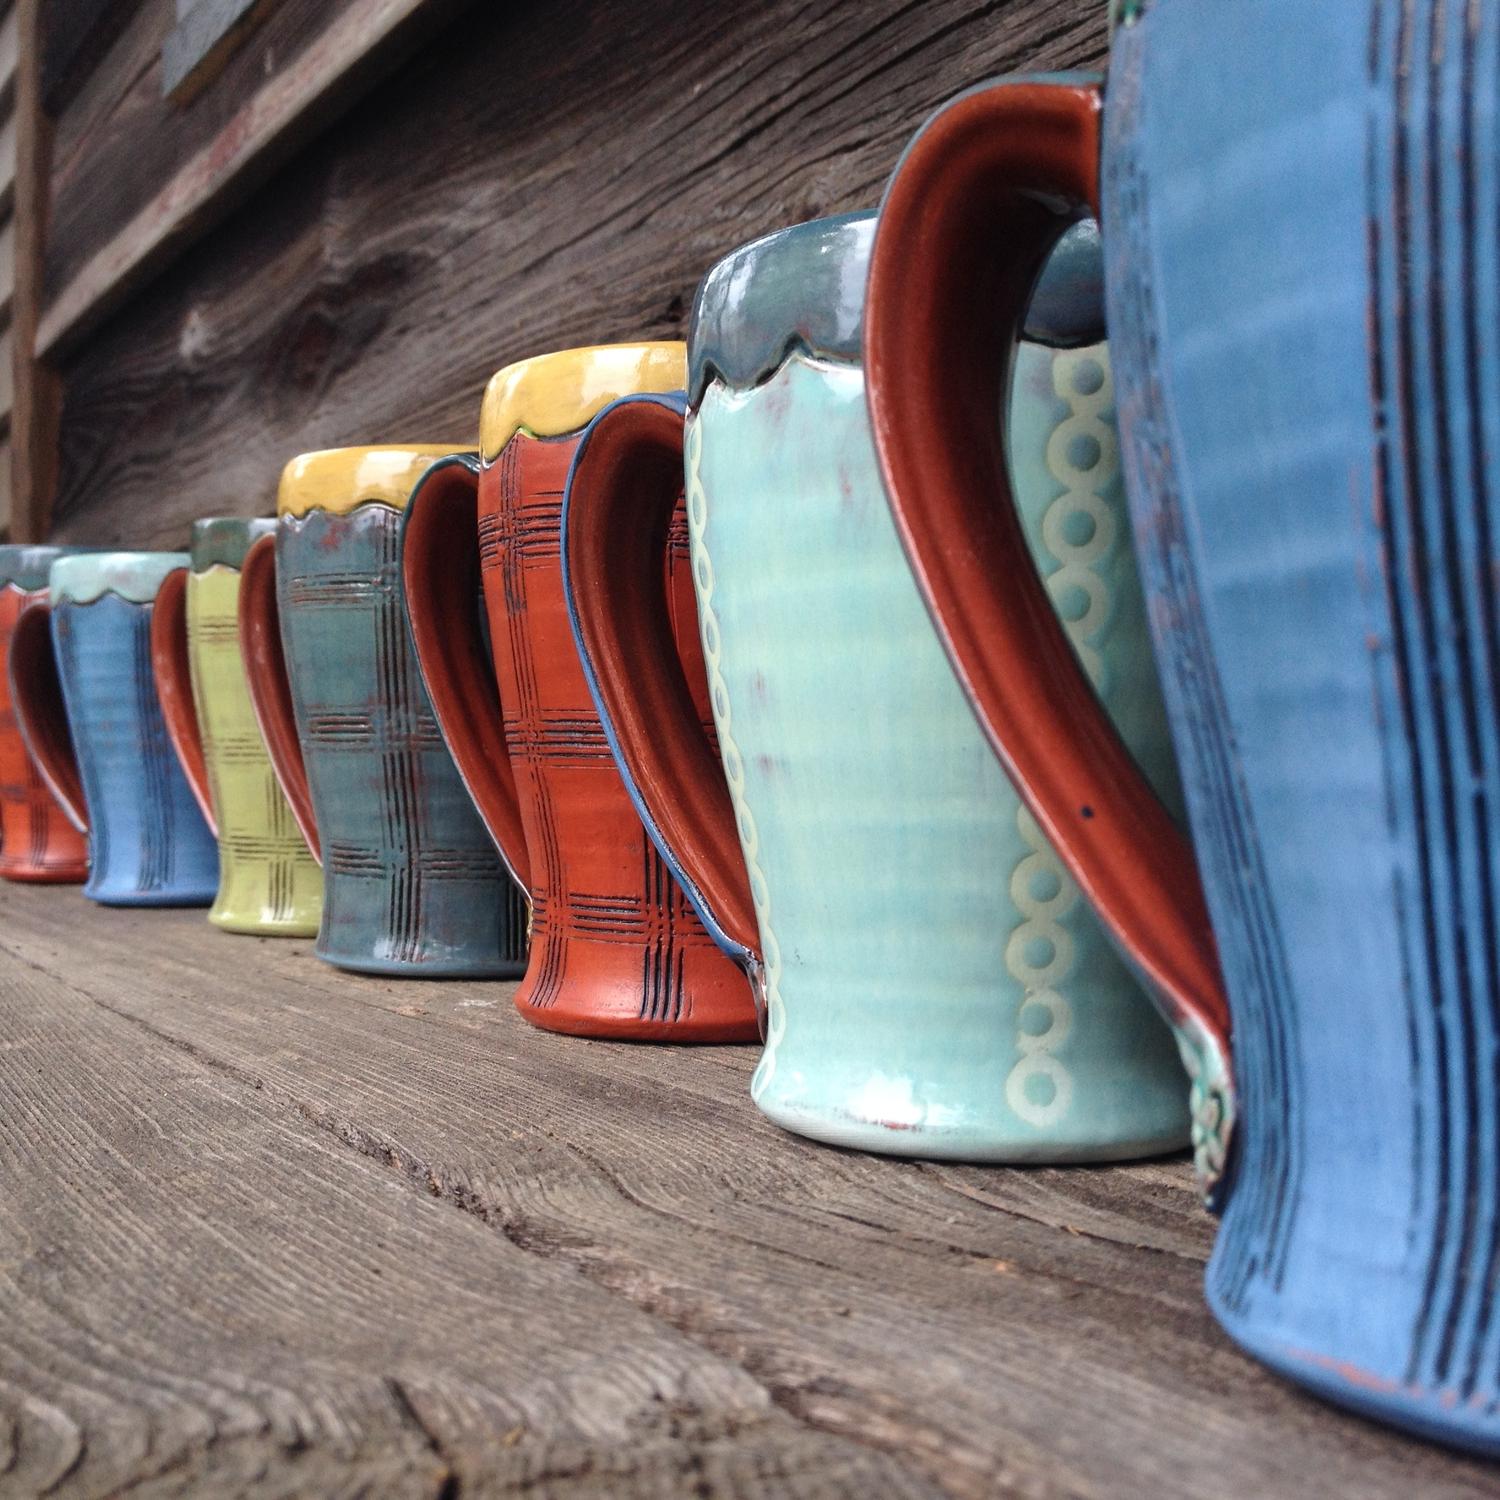 Row of vibrant colored ceramic coffee mugs created by artist 艾米·桑德斯.